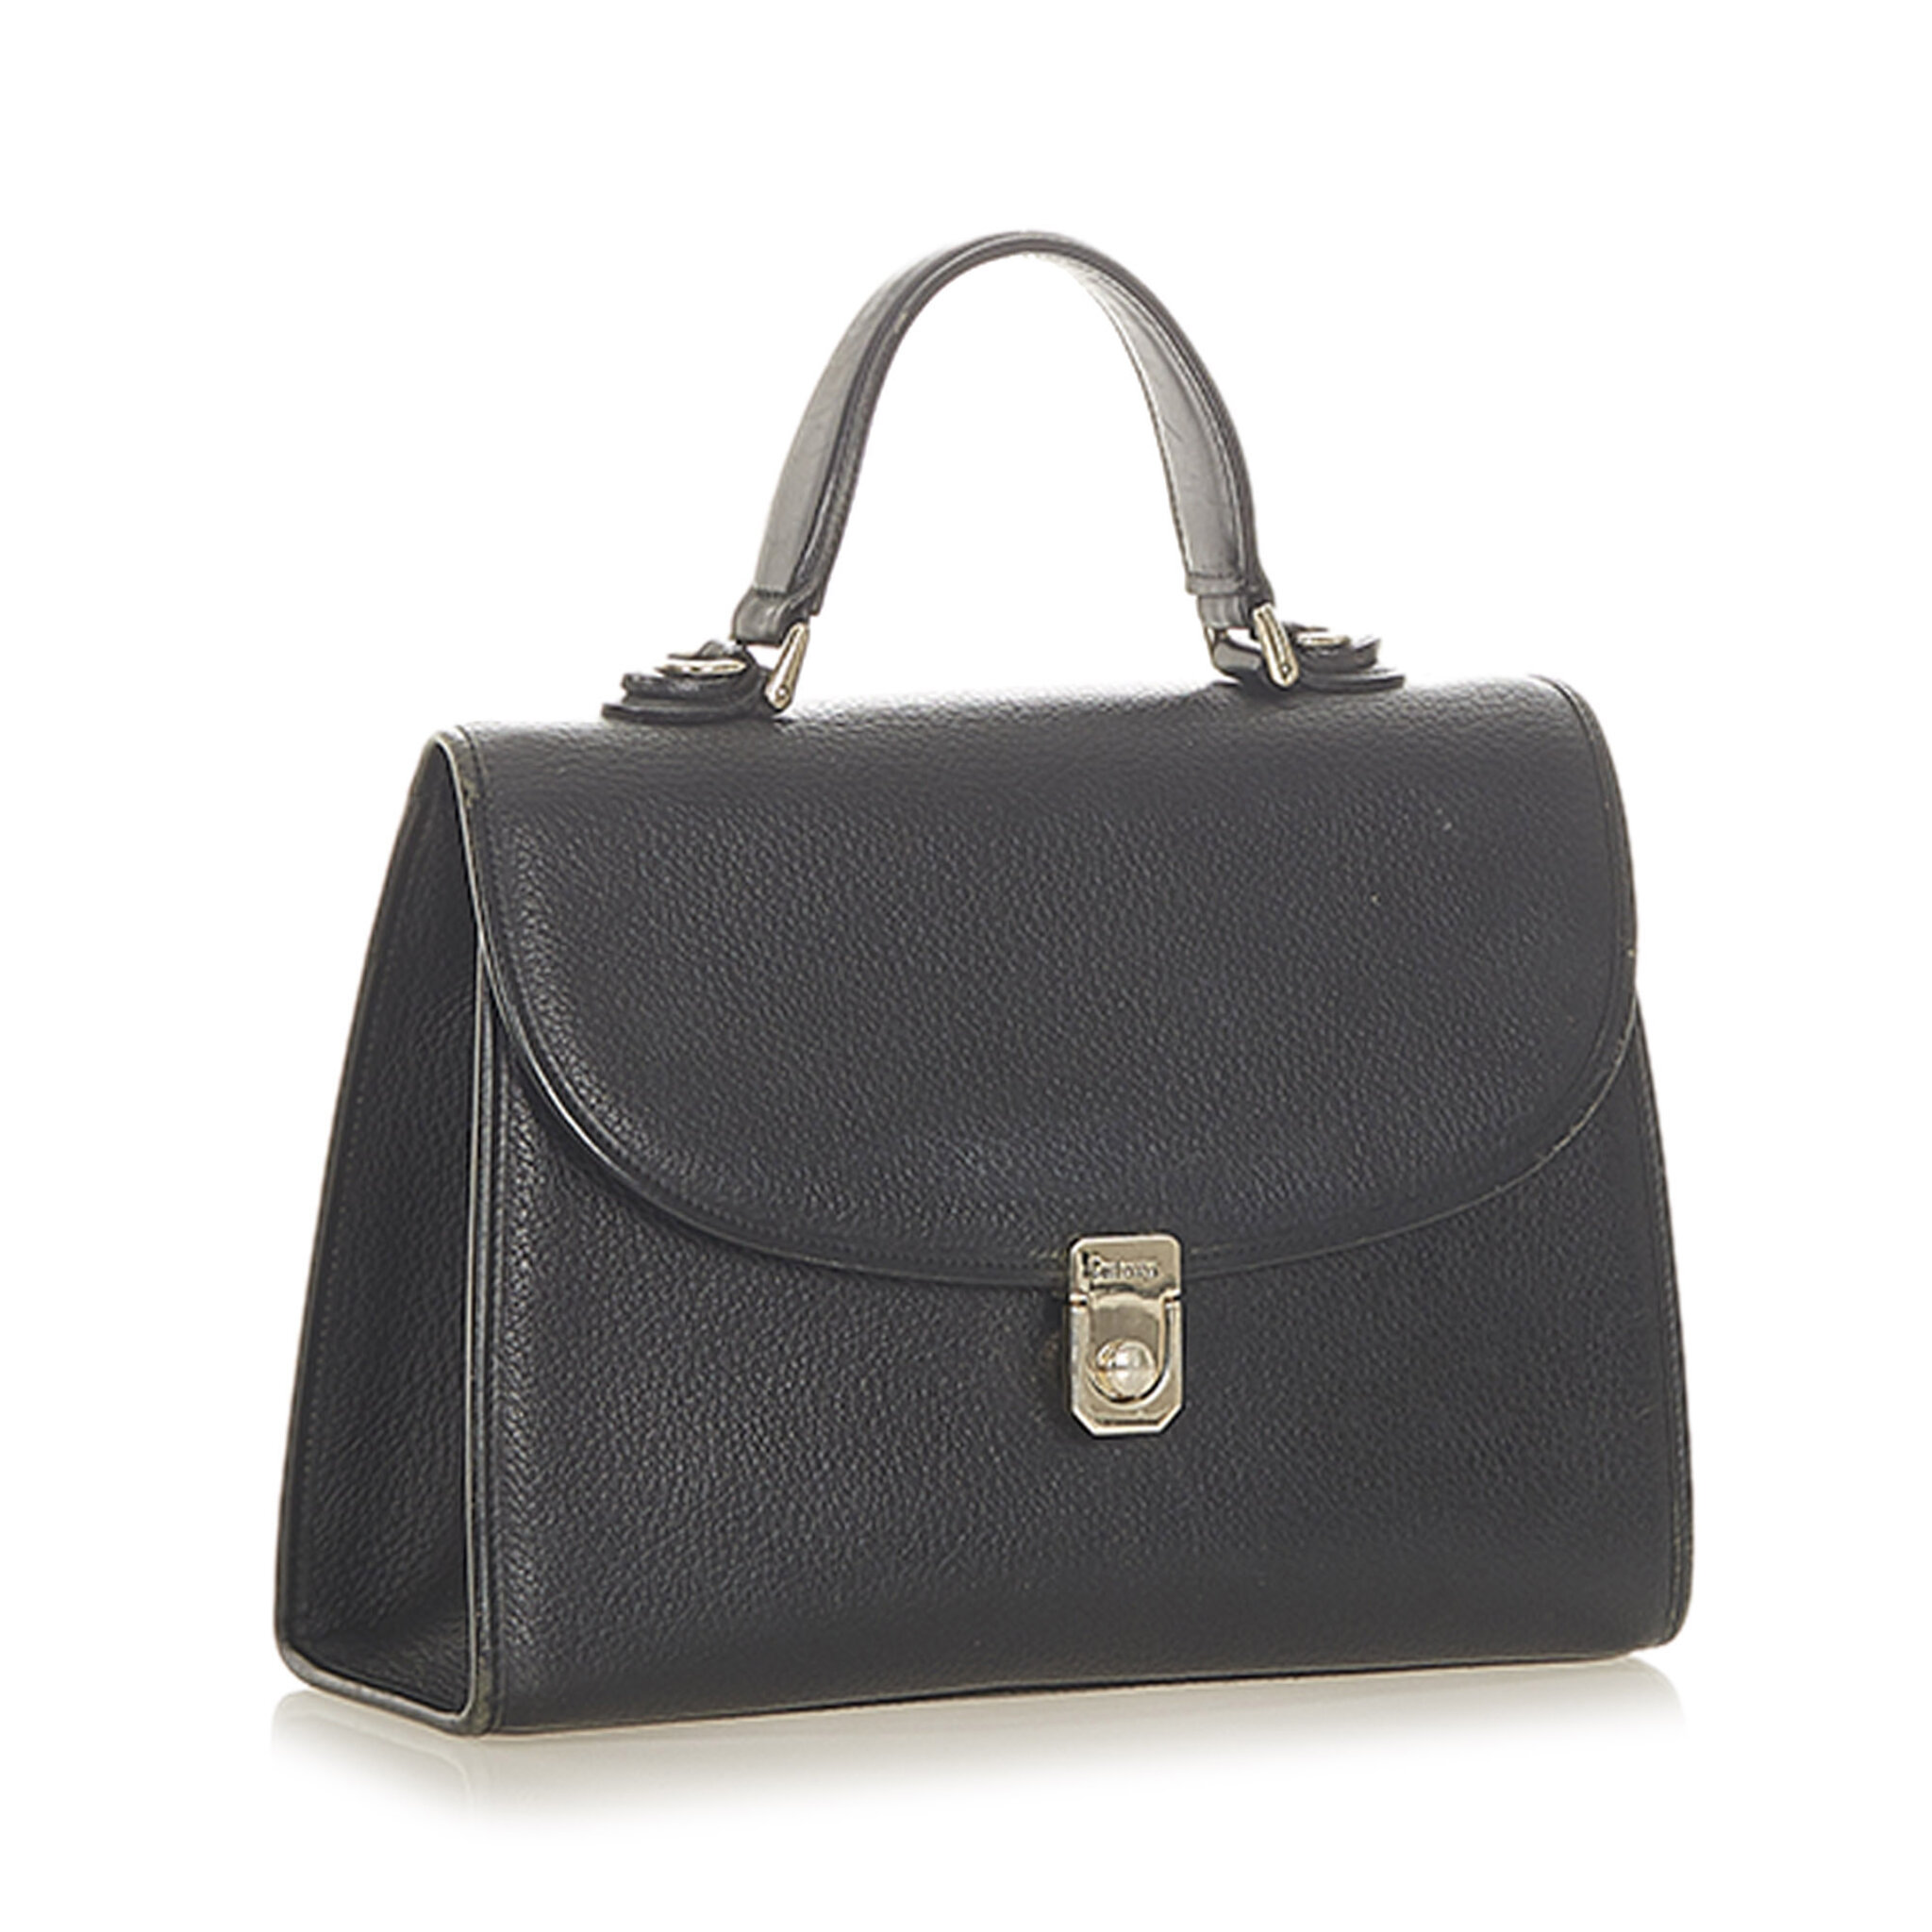 Burberry Leather Handbag, black